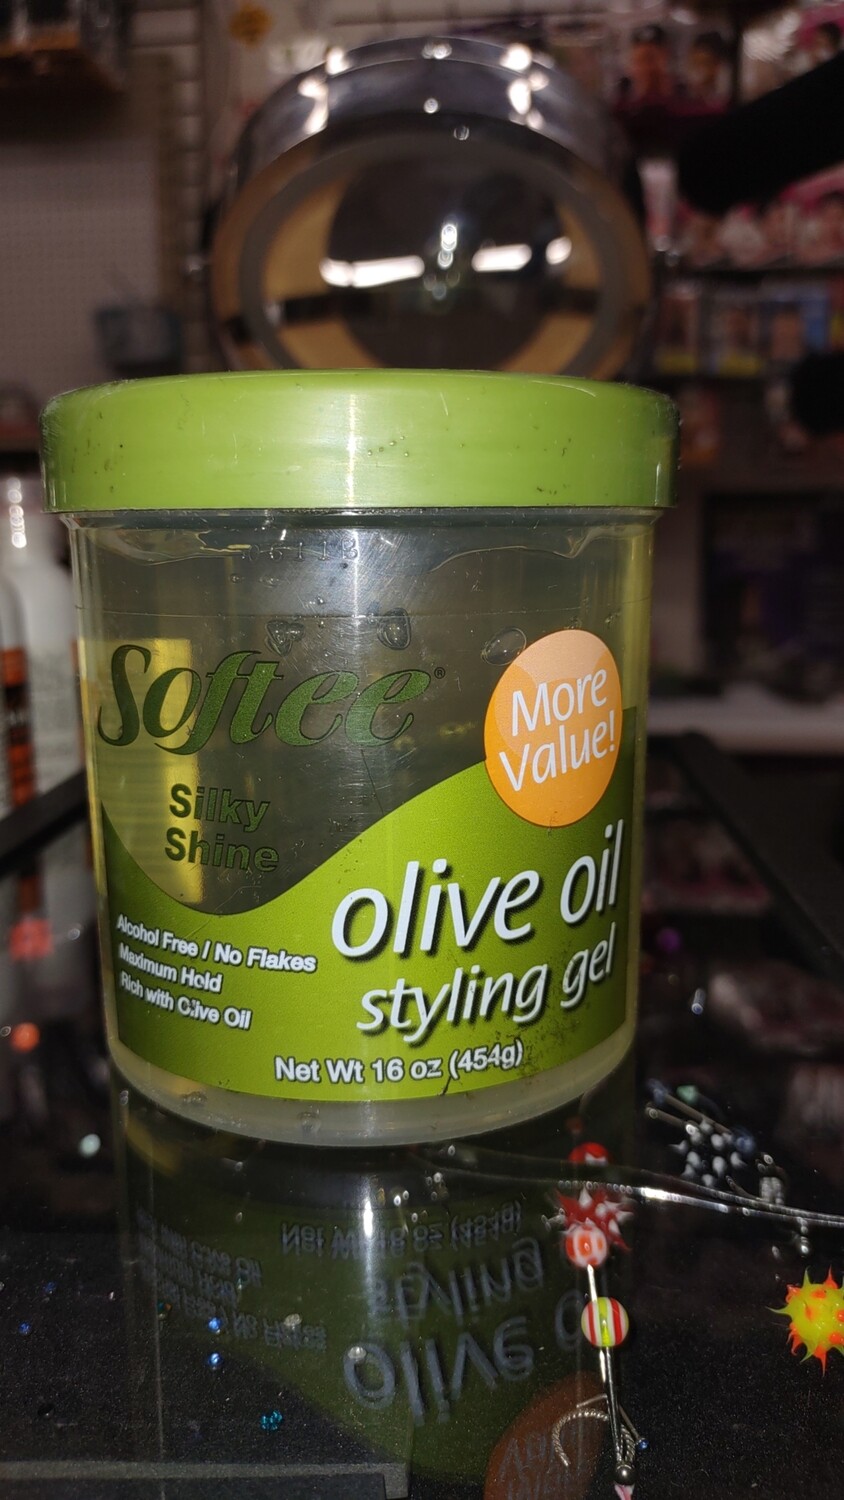 Softee Olive Oil Styling Gel 16 oz.